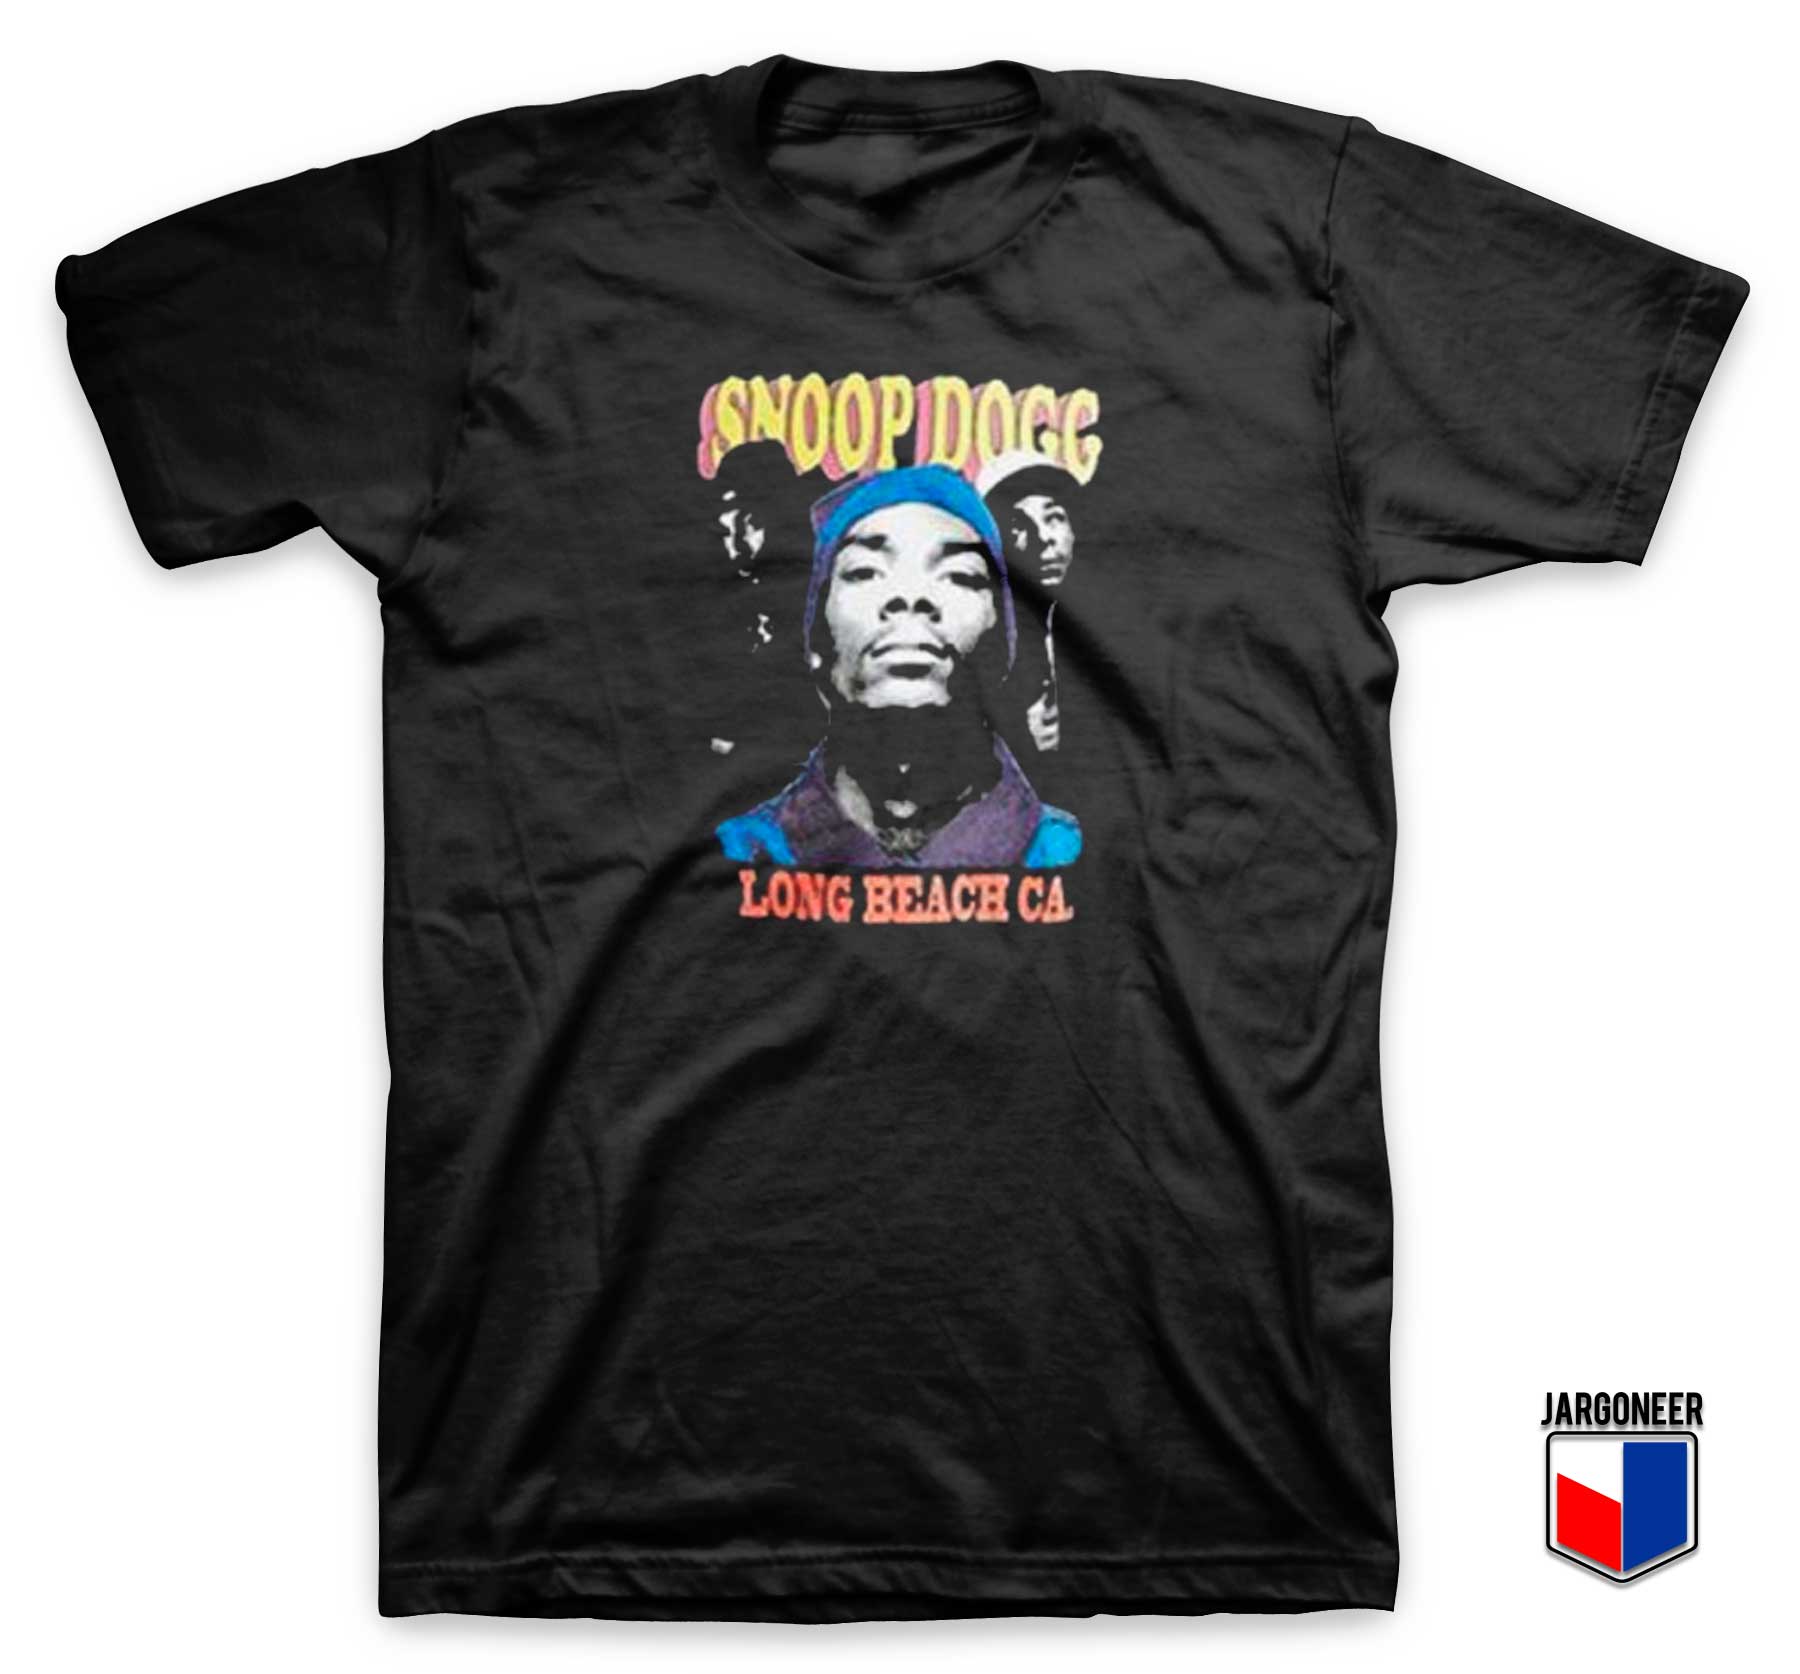 Snoop Dogg Long Beach CA T Shirt 1 - Shop Unique Graphic Cool Shirt Designs